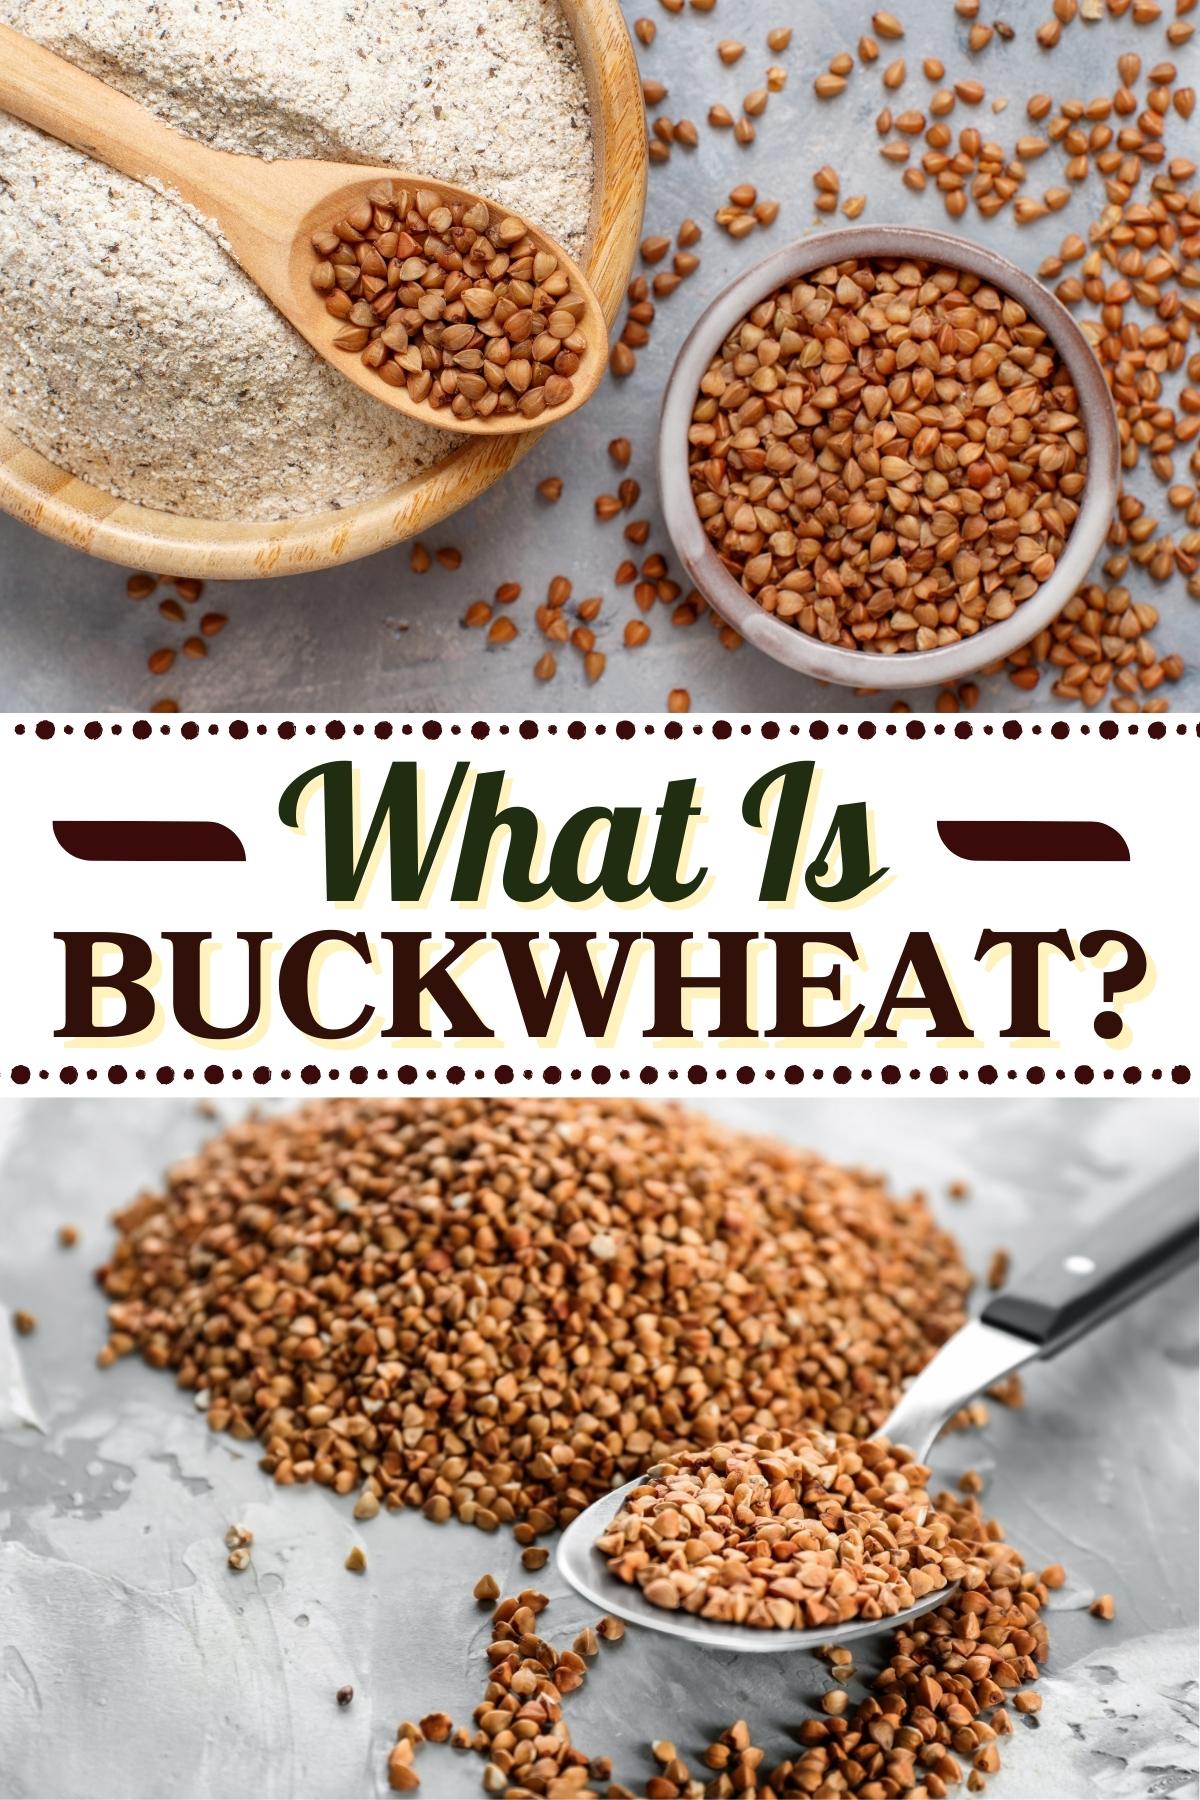 What is Buckwheat?